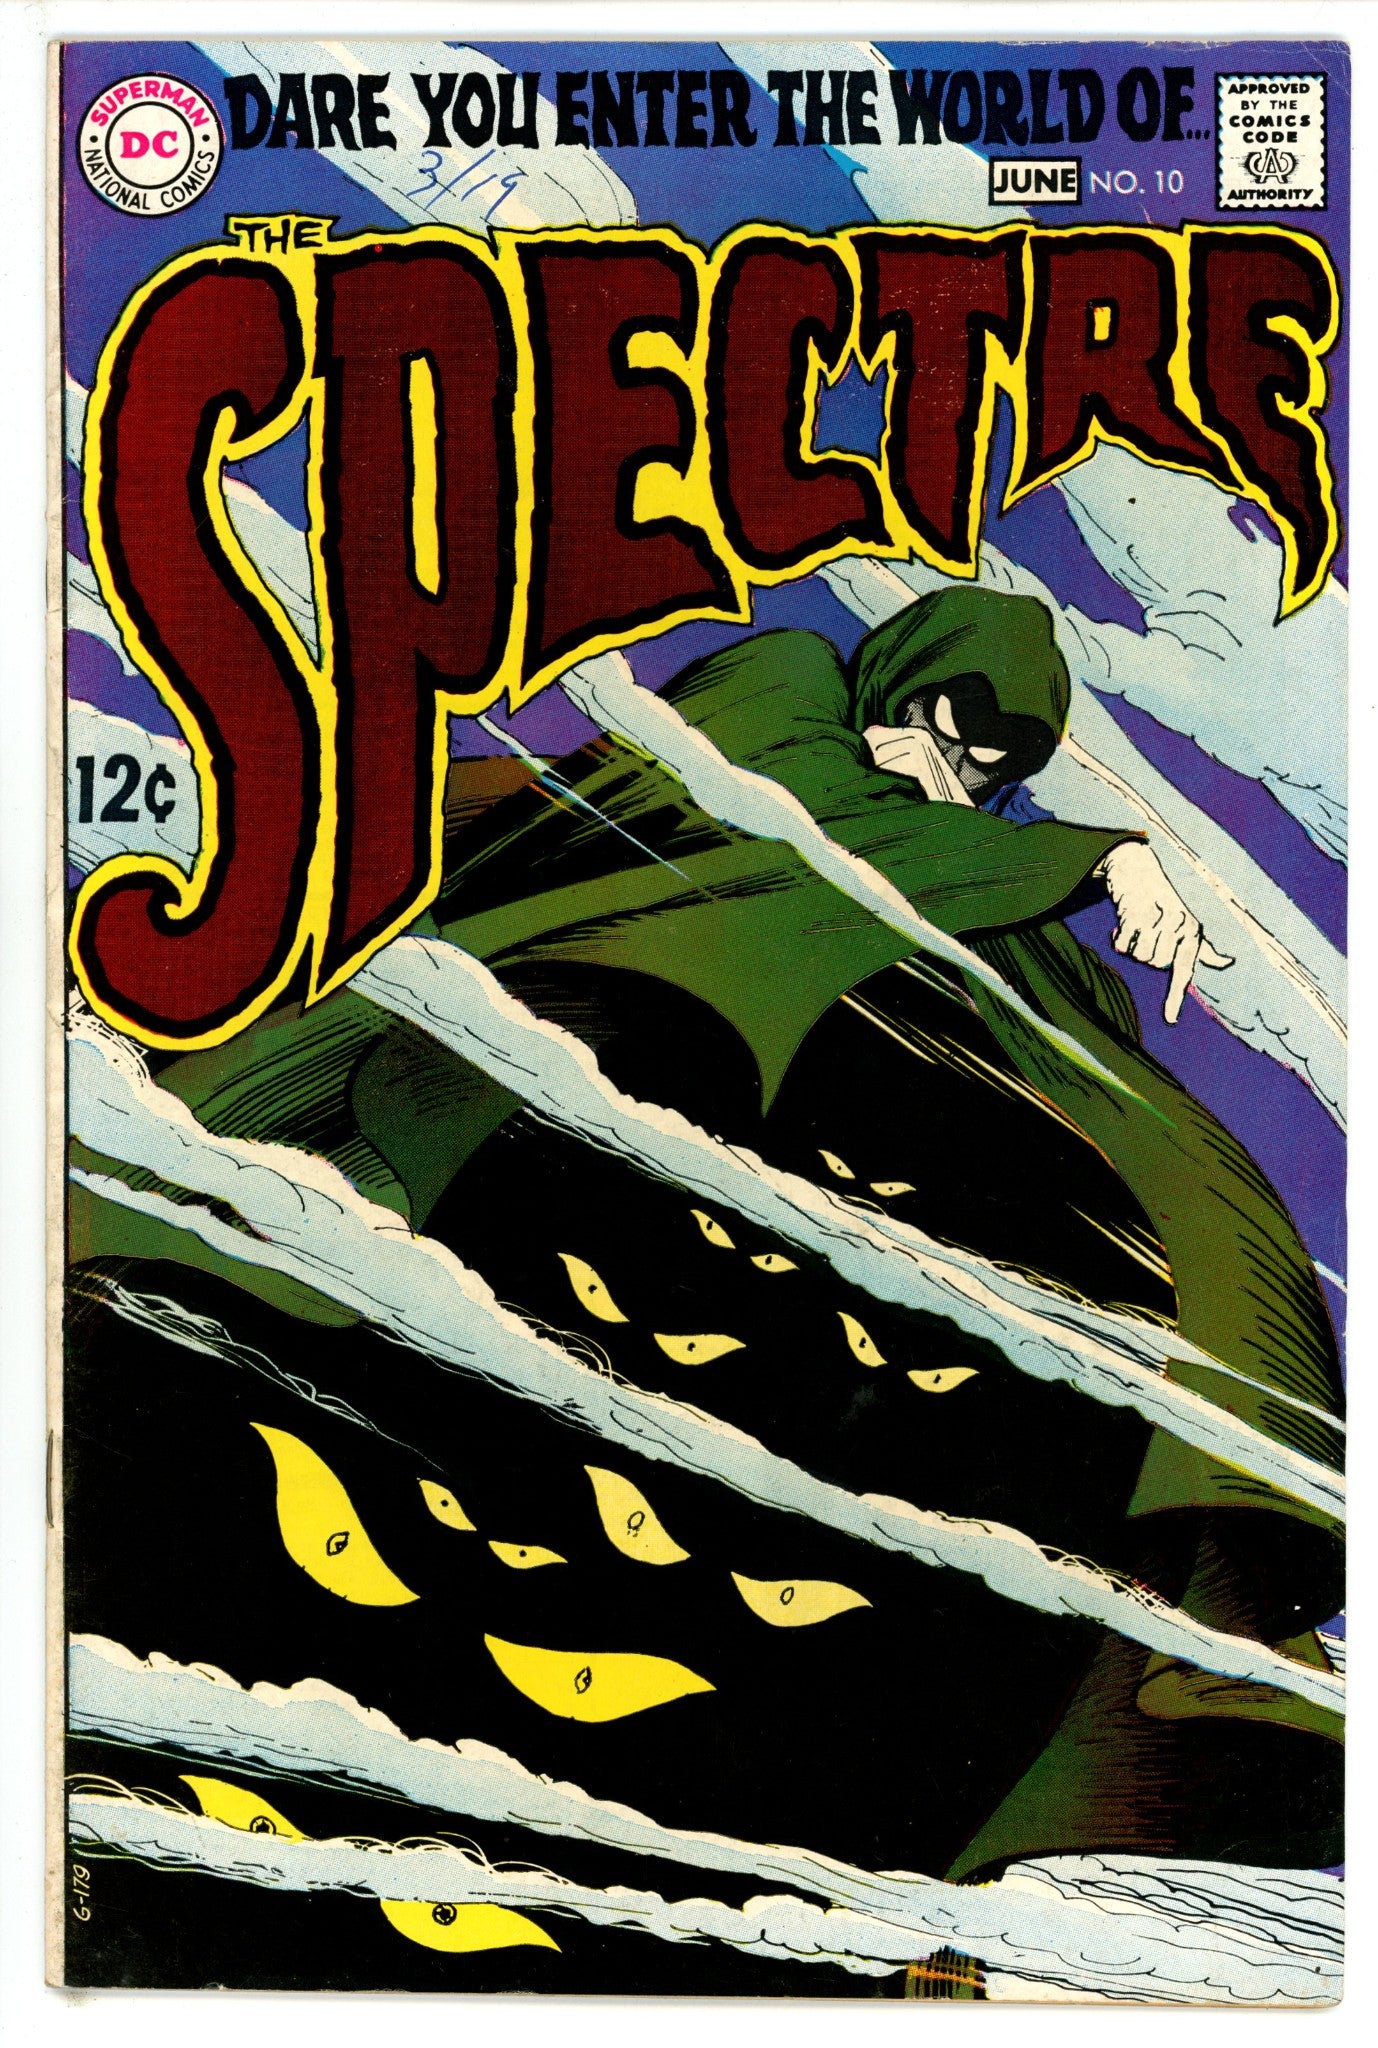 The Spectre Vol 1 10 VG/FN (5.0) (1969) 